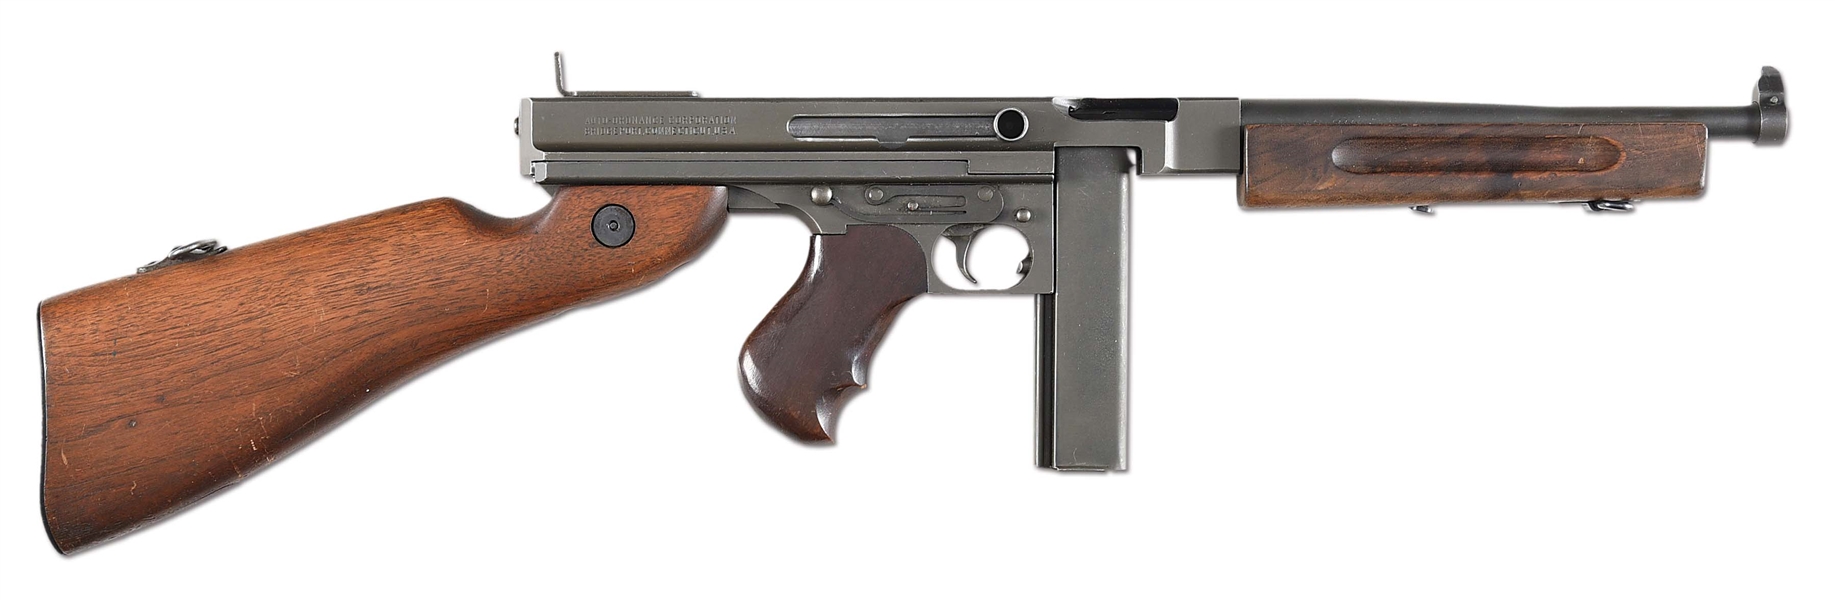 (N) ATTRACTIVE ARSENAL REFINISHED RARE M1 MODEL THOMPSON MACHINE GUN FROM WORLD WAR II ERA (CURIO AND RELIC).